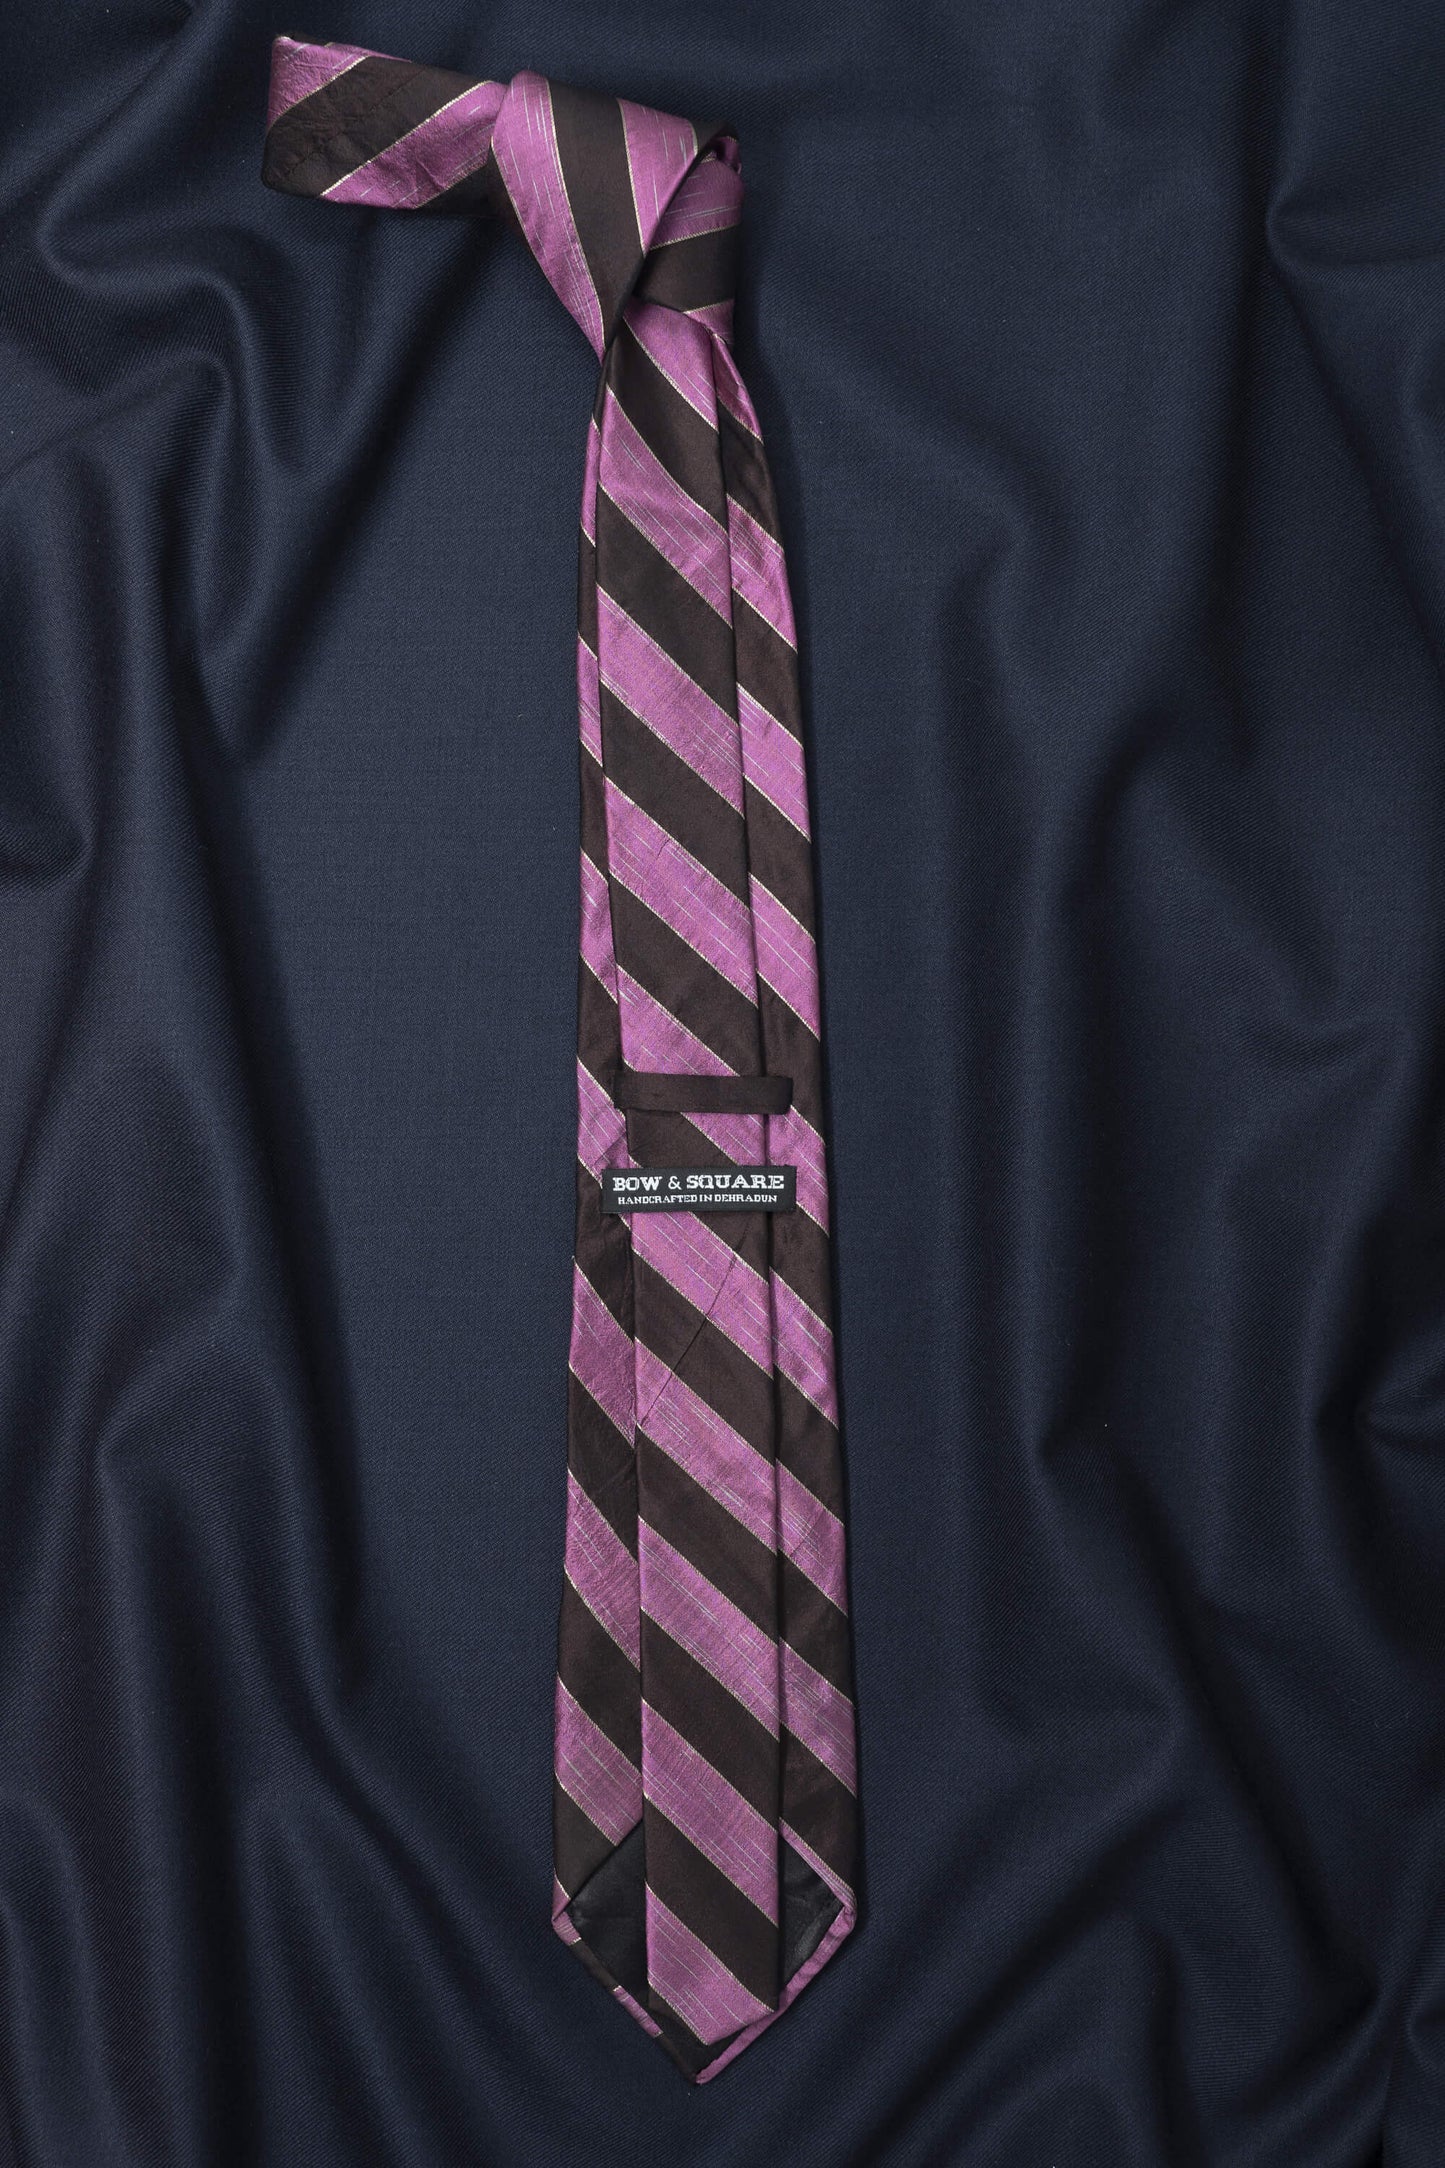 Regal Necktie